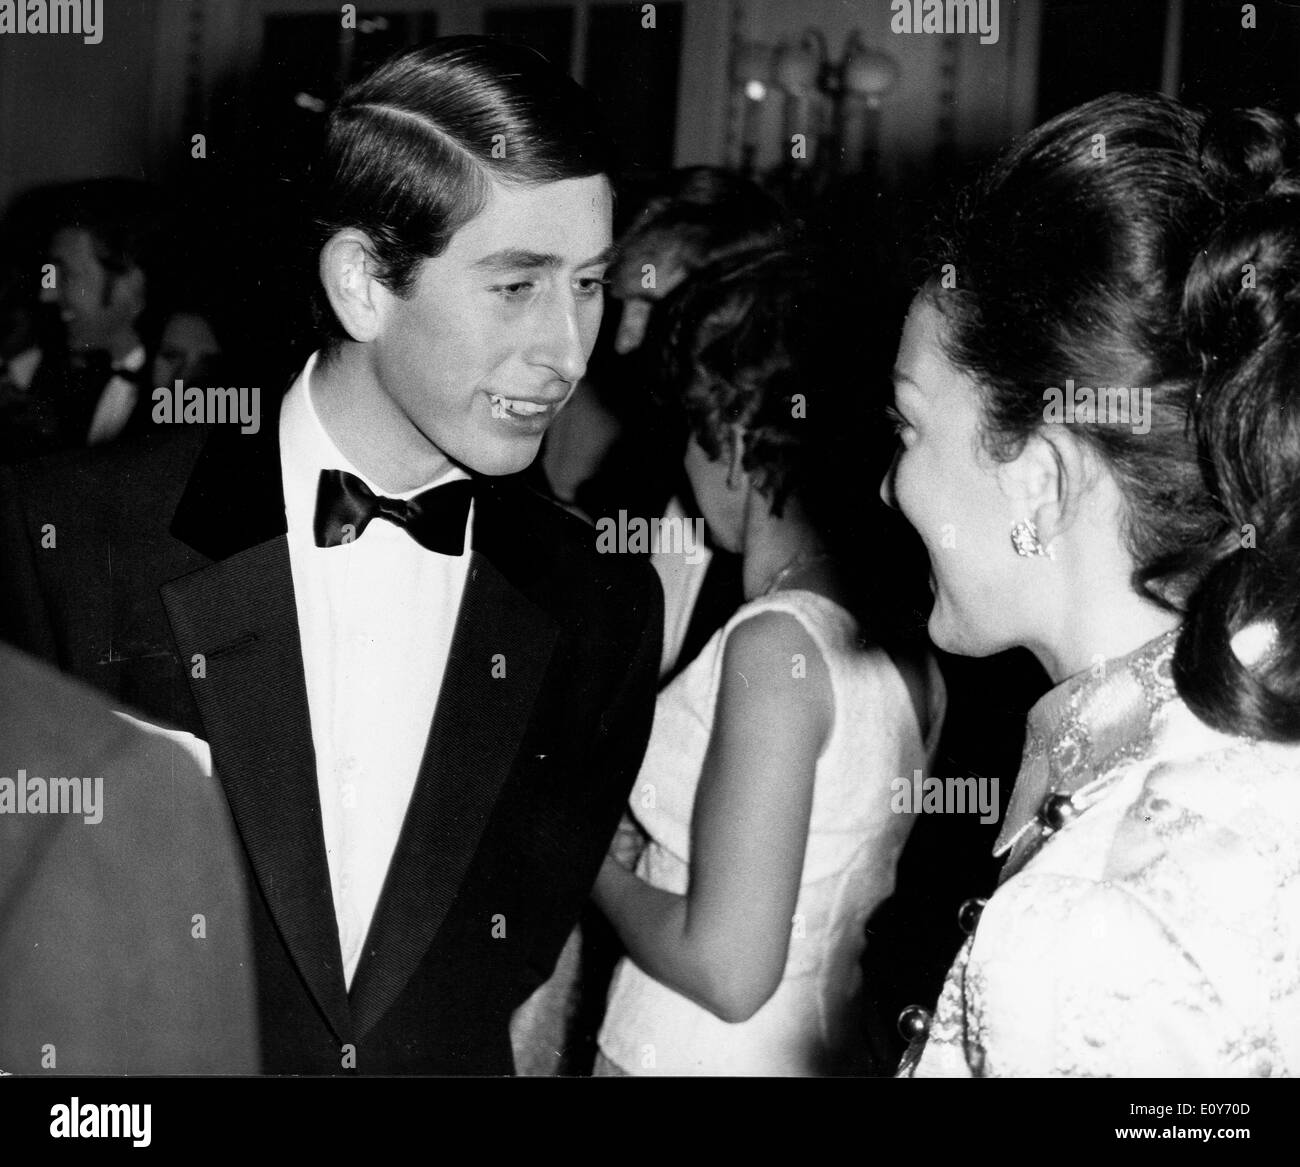 Prince Charles chats at a party Stock Photo